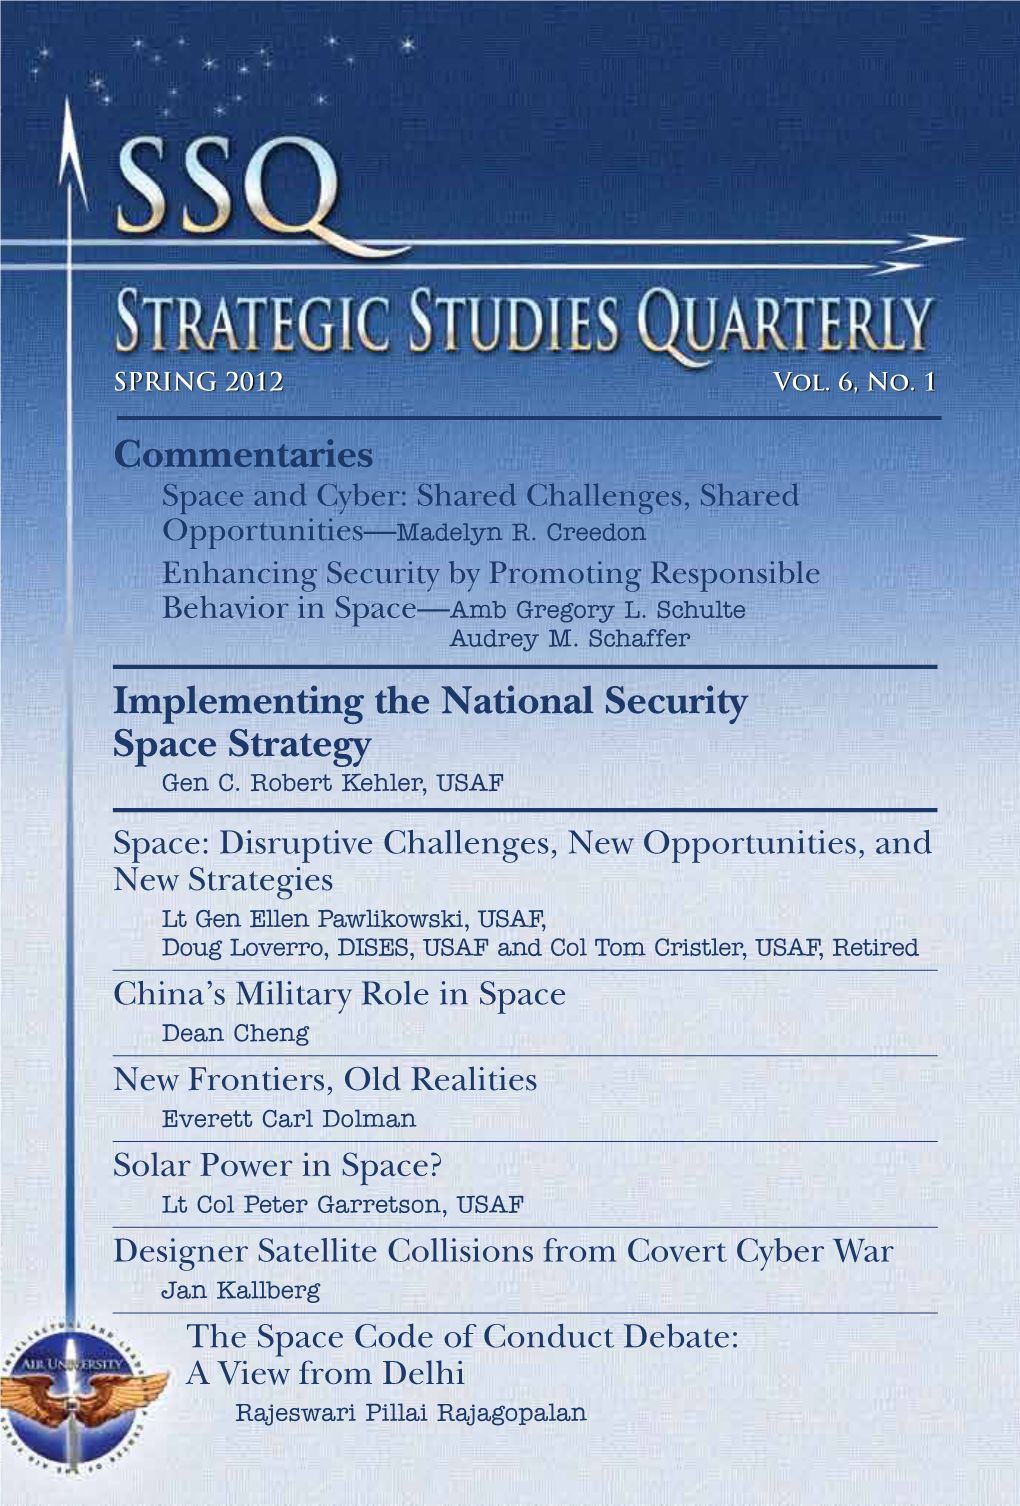 Strategic Studies Quarterly Vol 6, No 1, Spring 2012